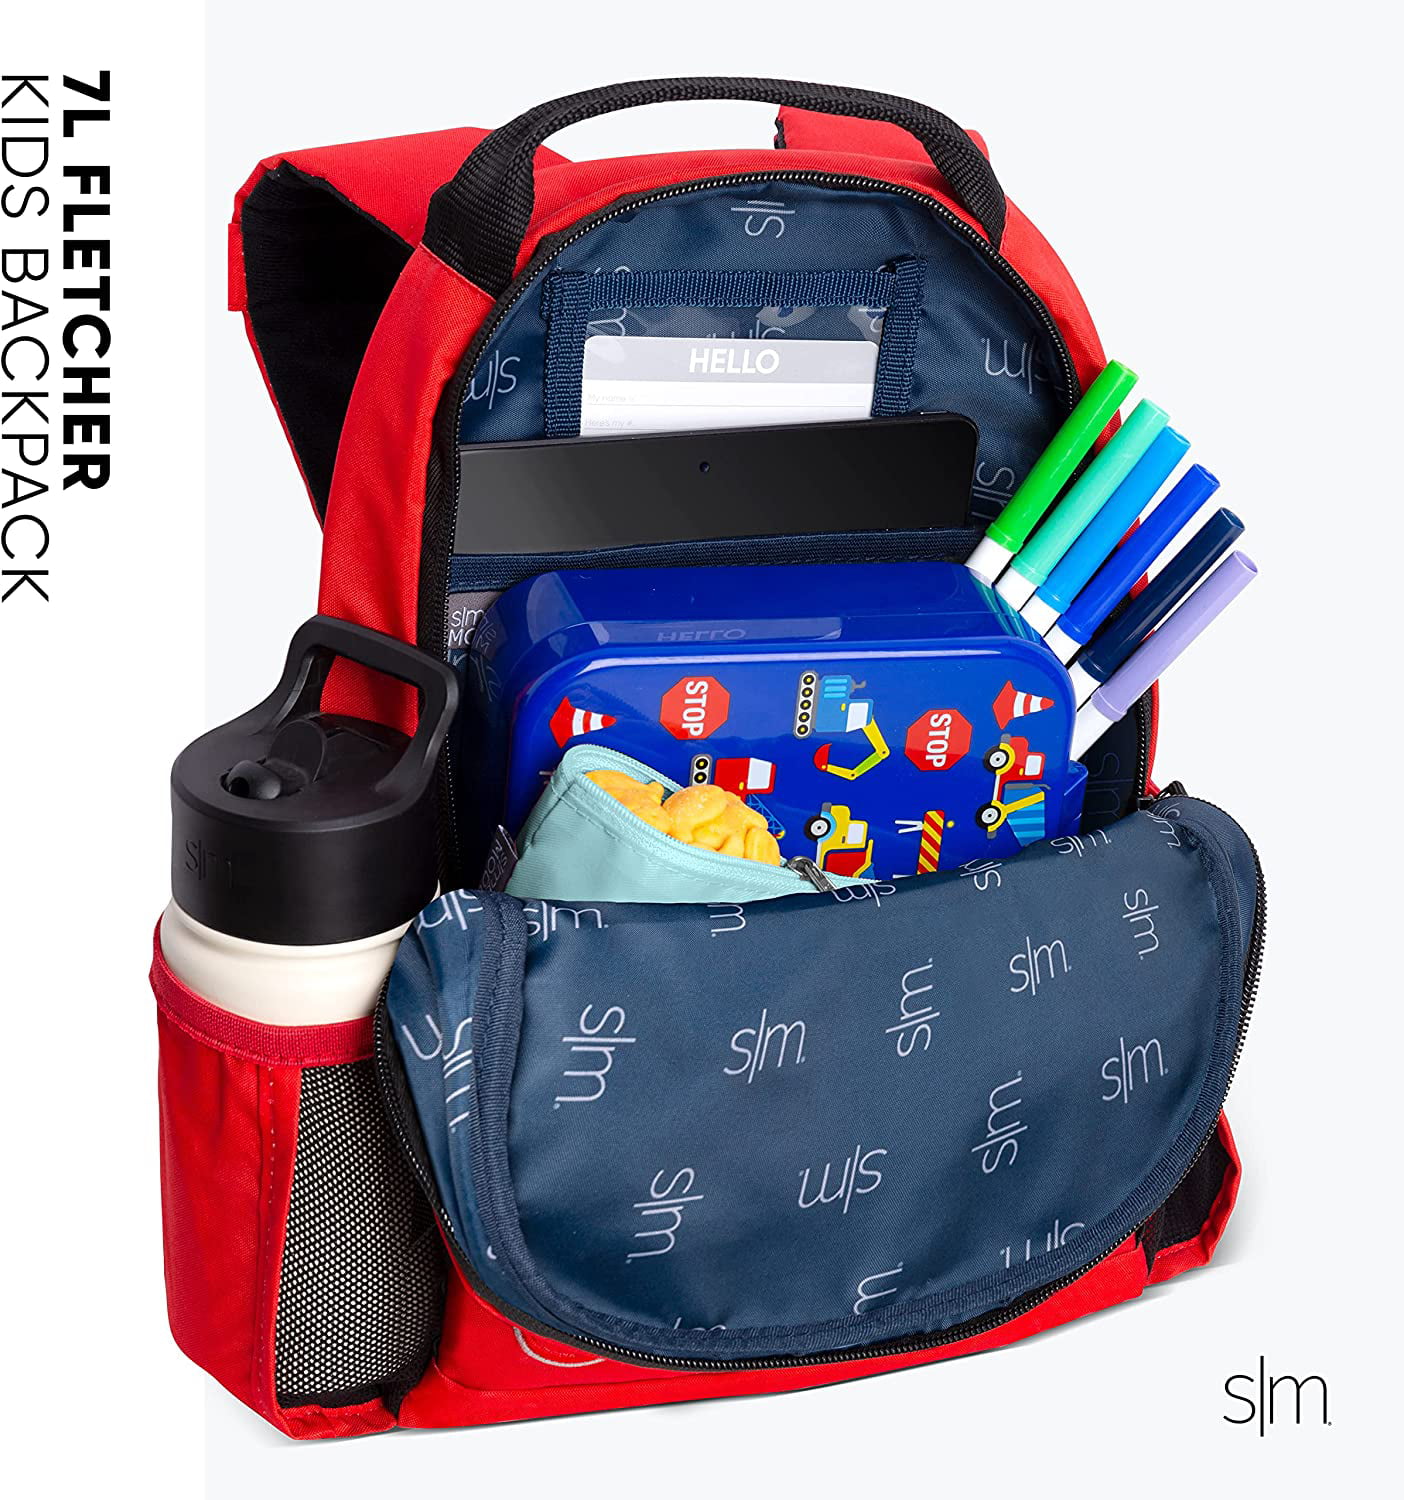 Simple Modern Toddler Backpack for School Boys